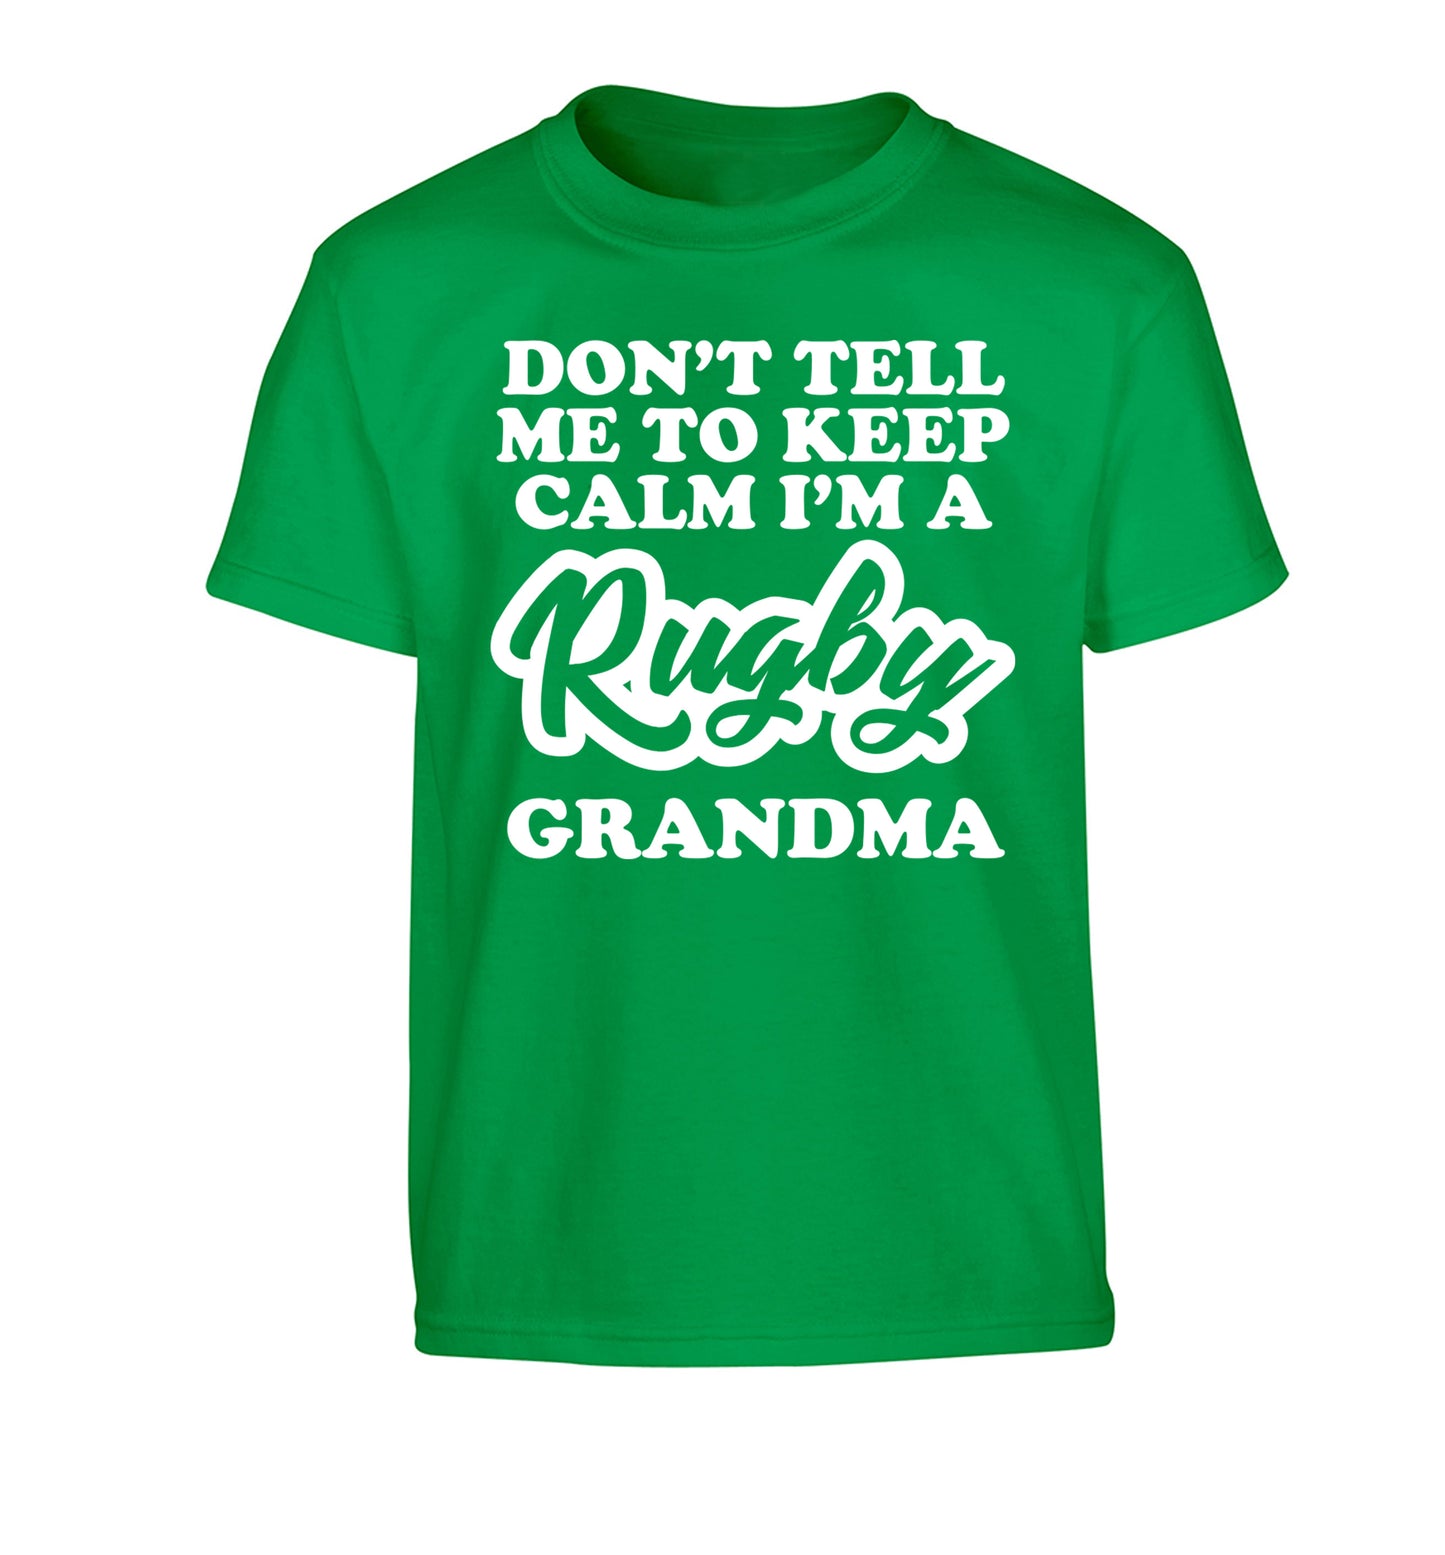 Don't tell me to keep calm I'm a rugby grandma Children's green Tshirt 12-13 Years